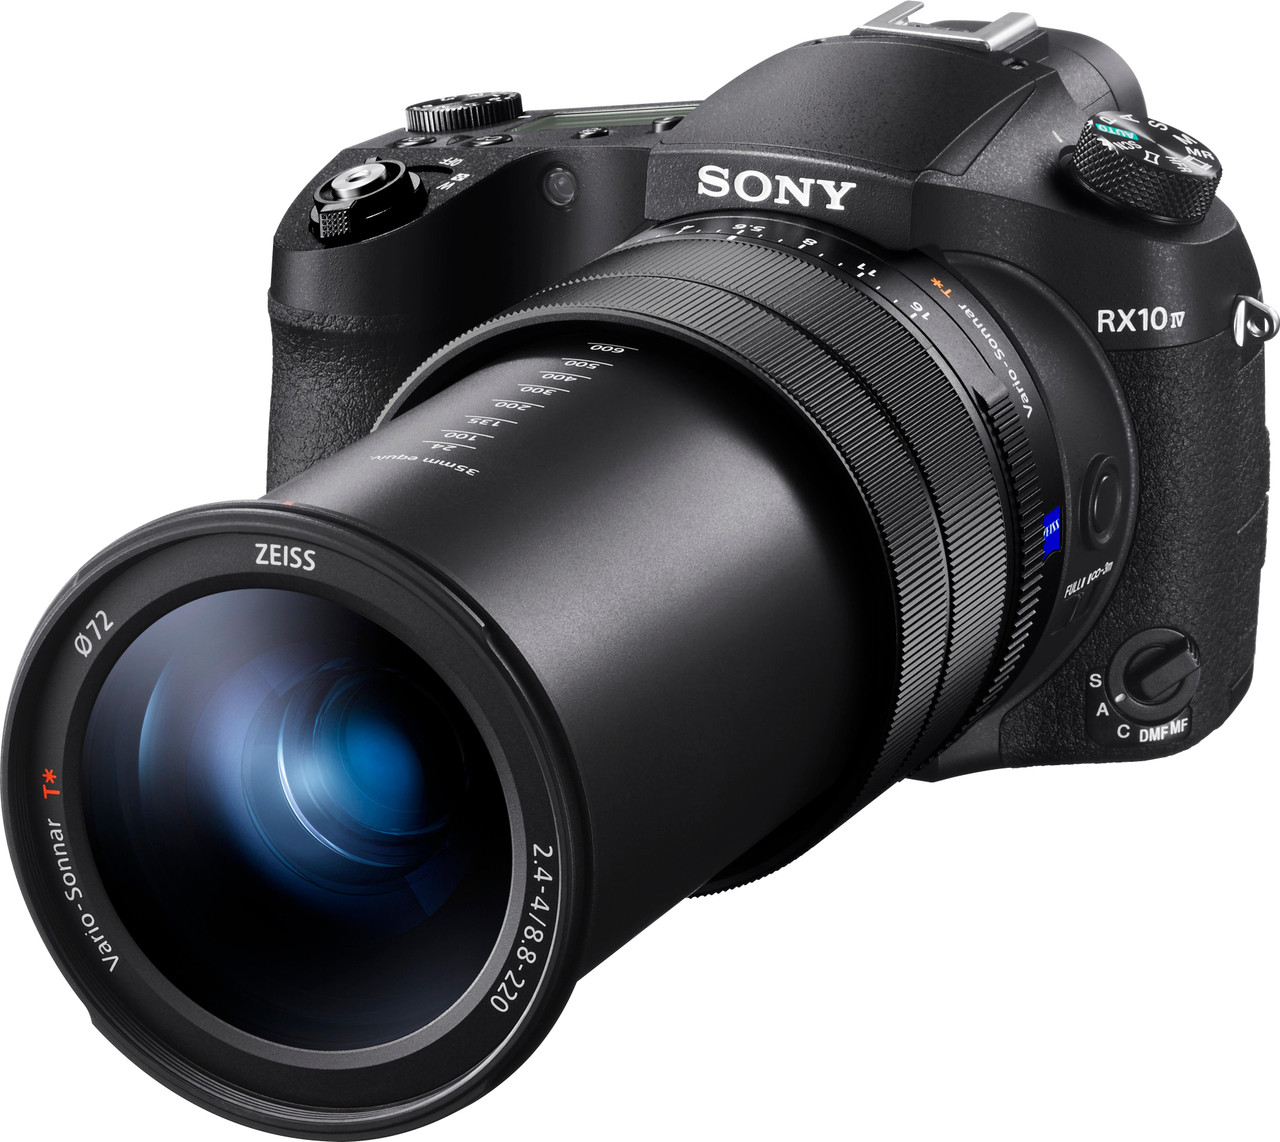 Sony - Cyber-shot RX10 IV 20.1-Megapixel Digital Camera